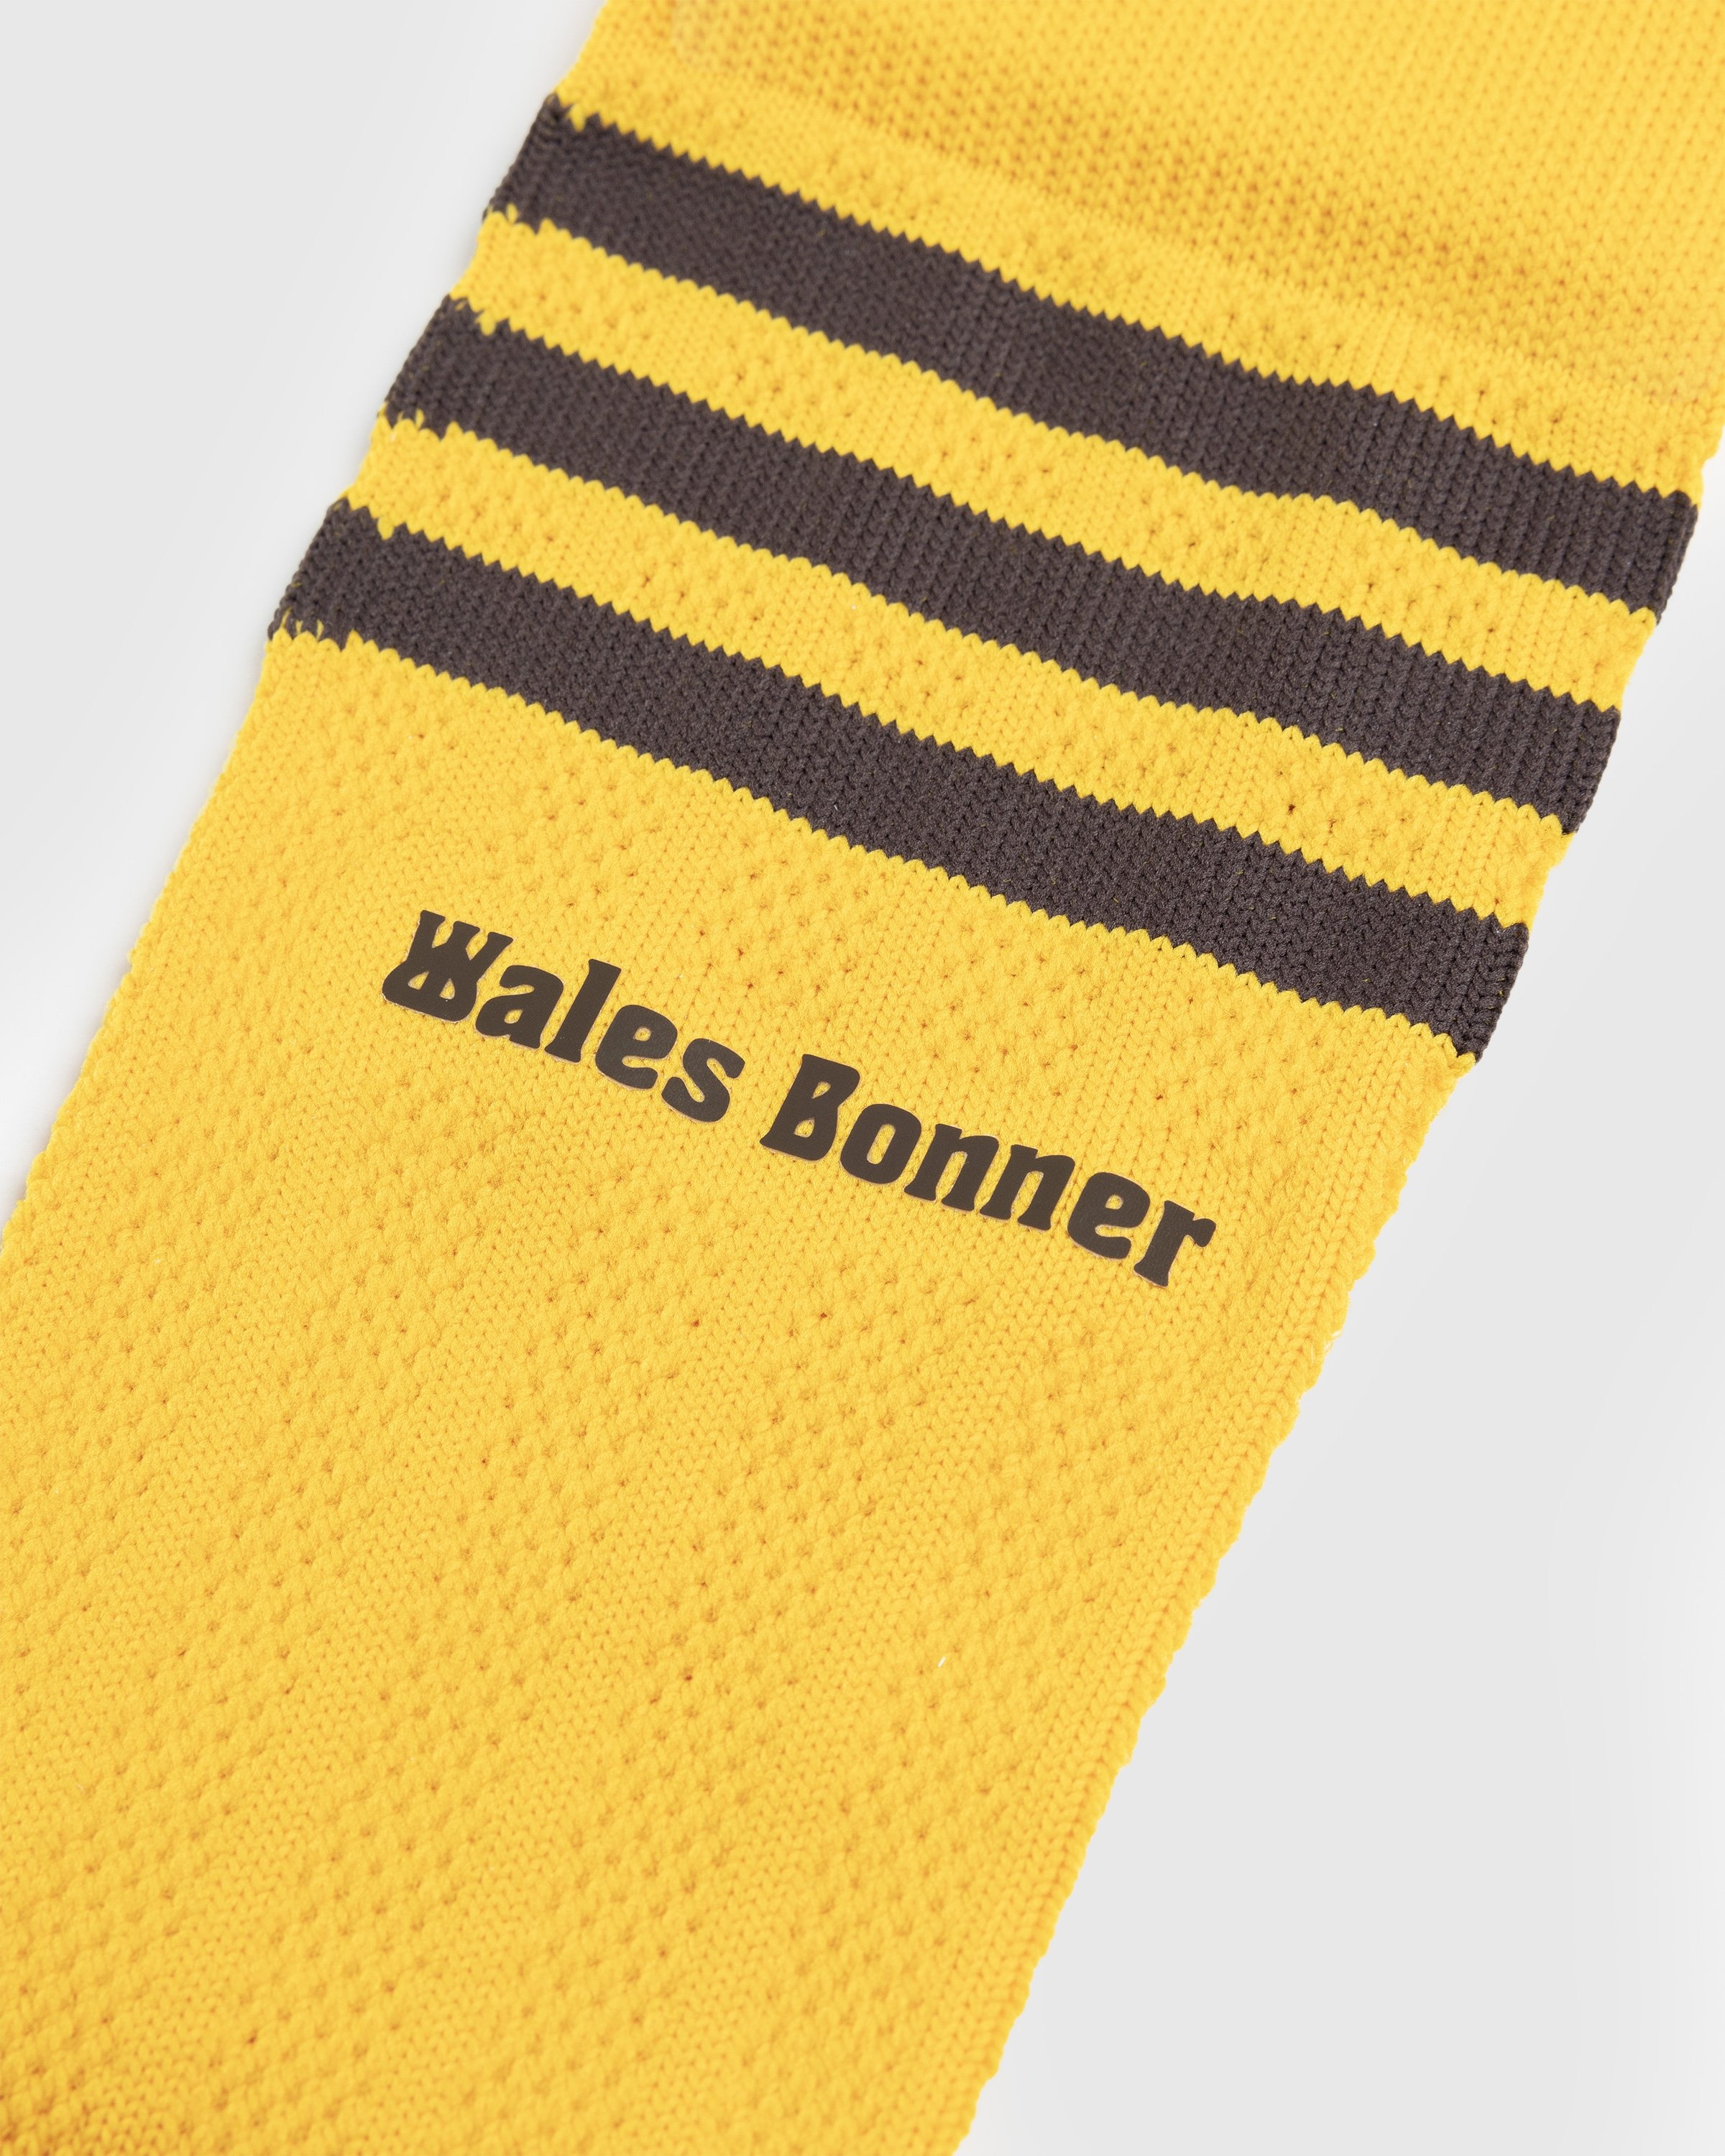 Adidas x Wales Bonner – Crochet Socks Three-Pack Multi - Socks - Multi - Image 7